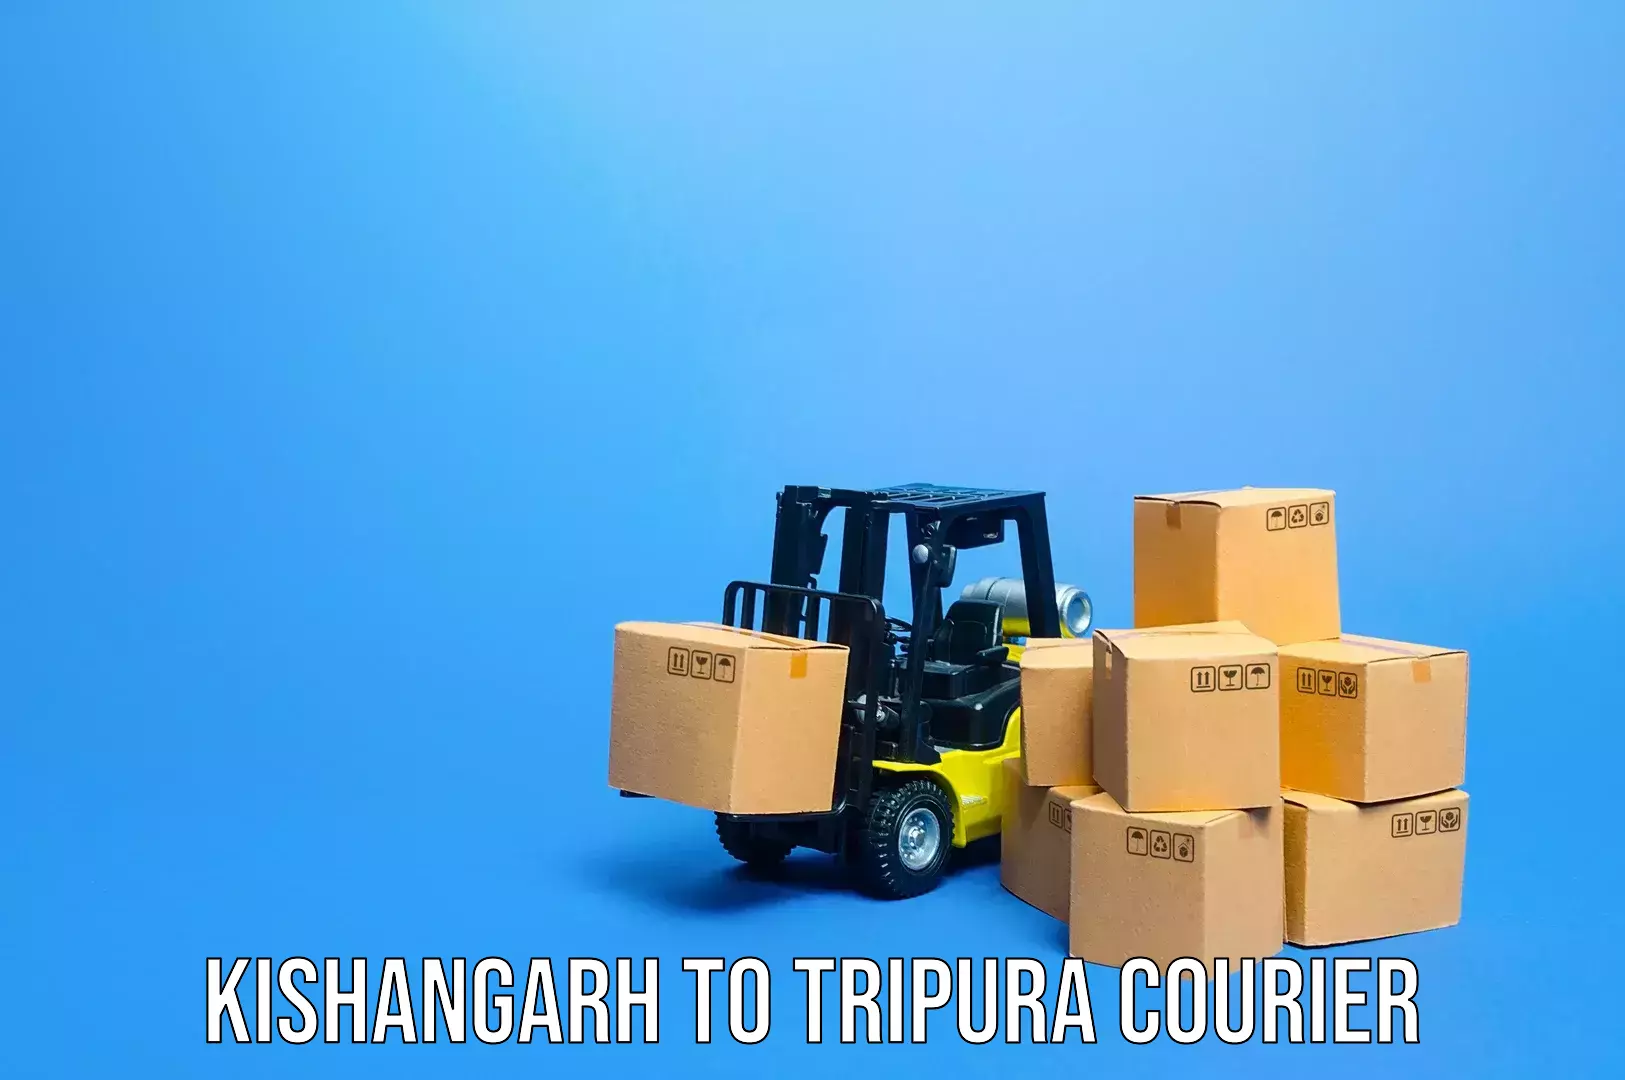 Multi-destination luggage transport in Kishangarh to Udaipur Tripura